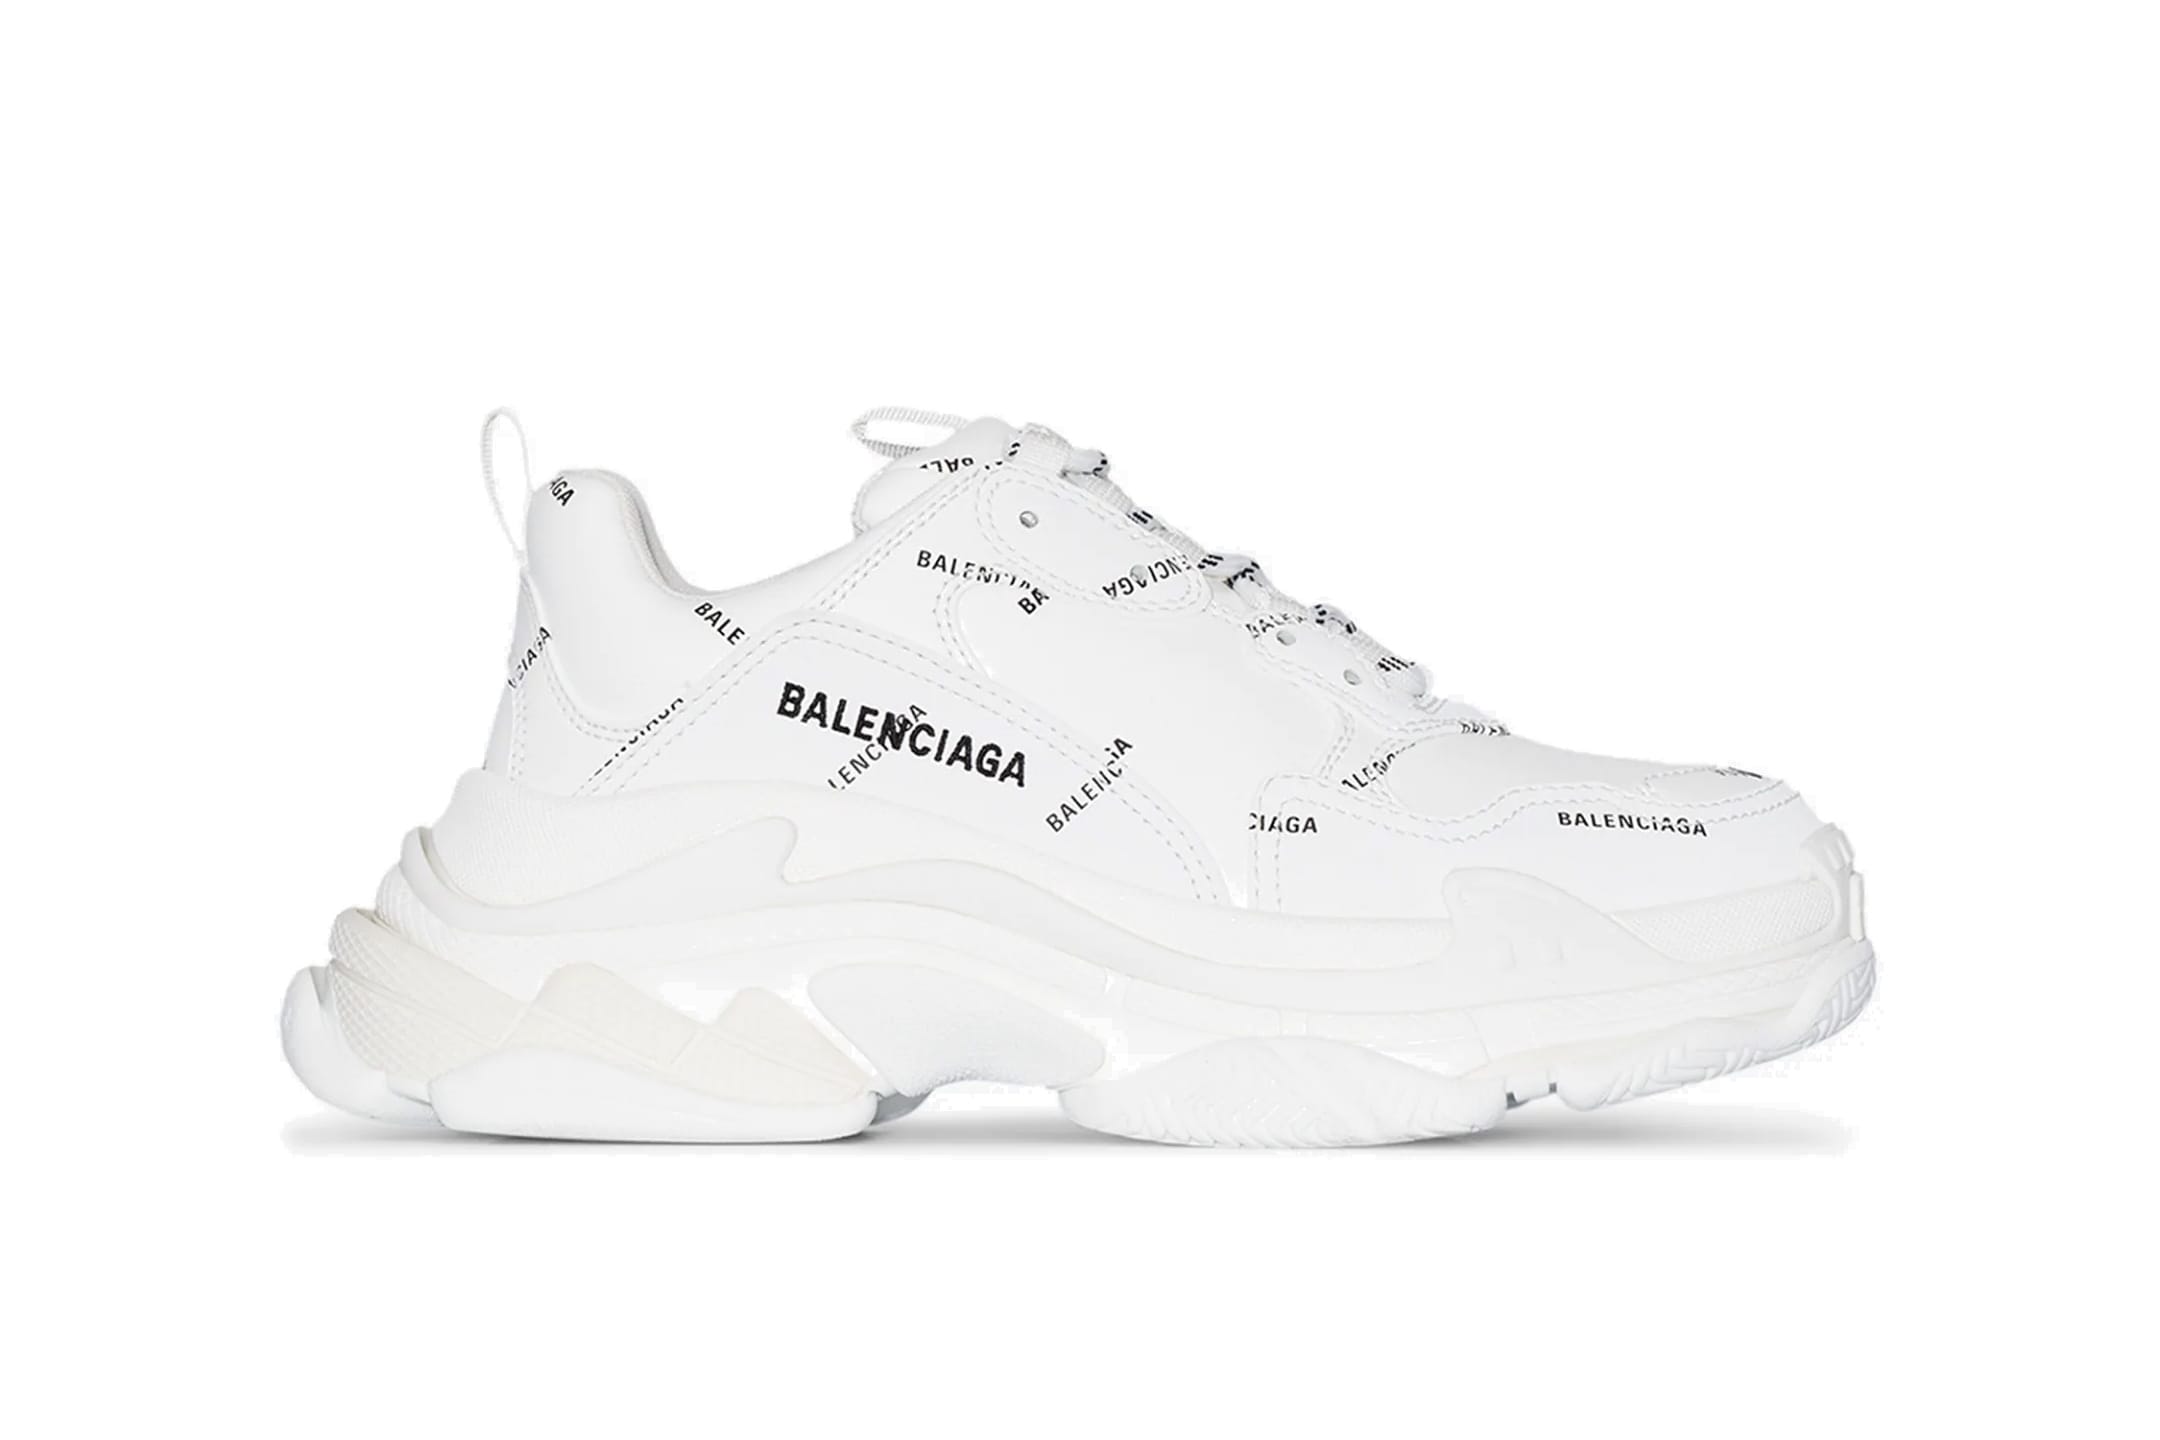 High Quality Replica Balenciaga Triple S Sneakers Sale în 2019